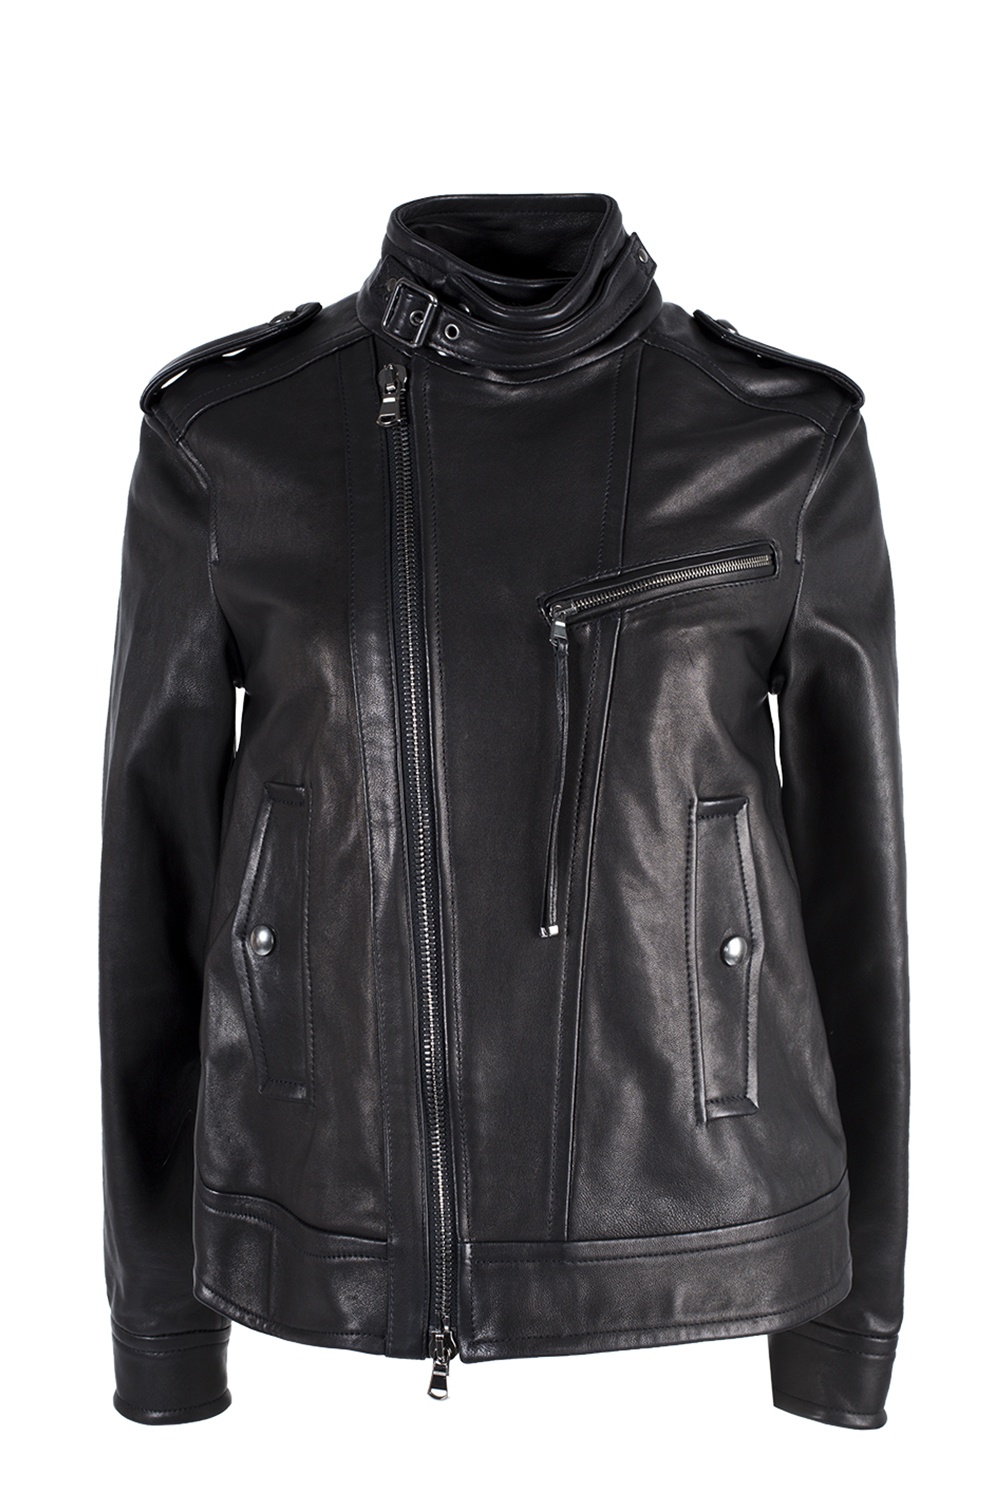 Leather jacket with epaulettes Diesel Black Gold - Vitkac GB